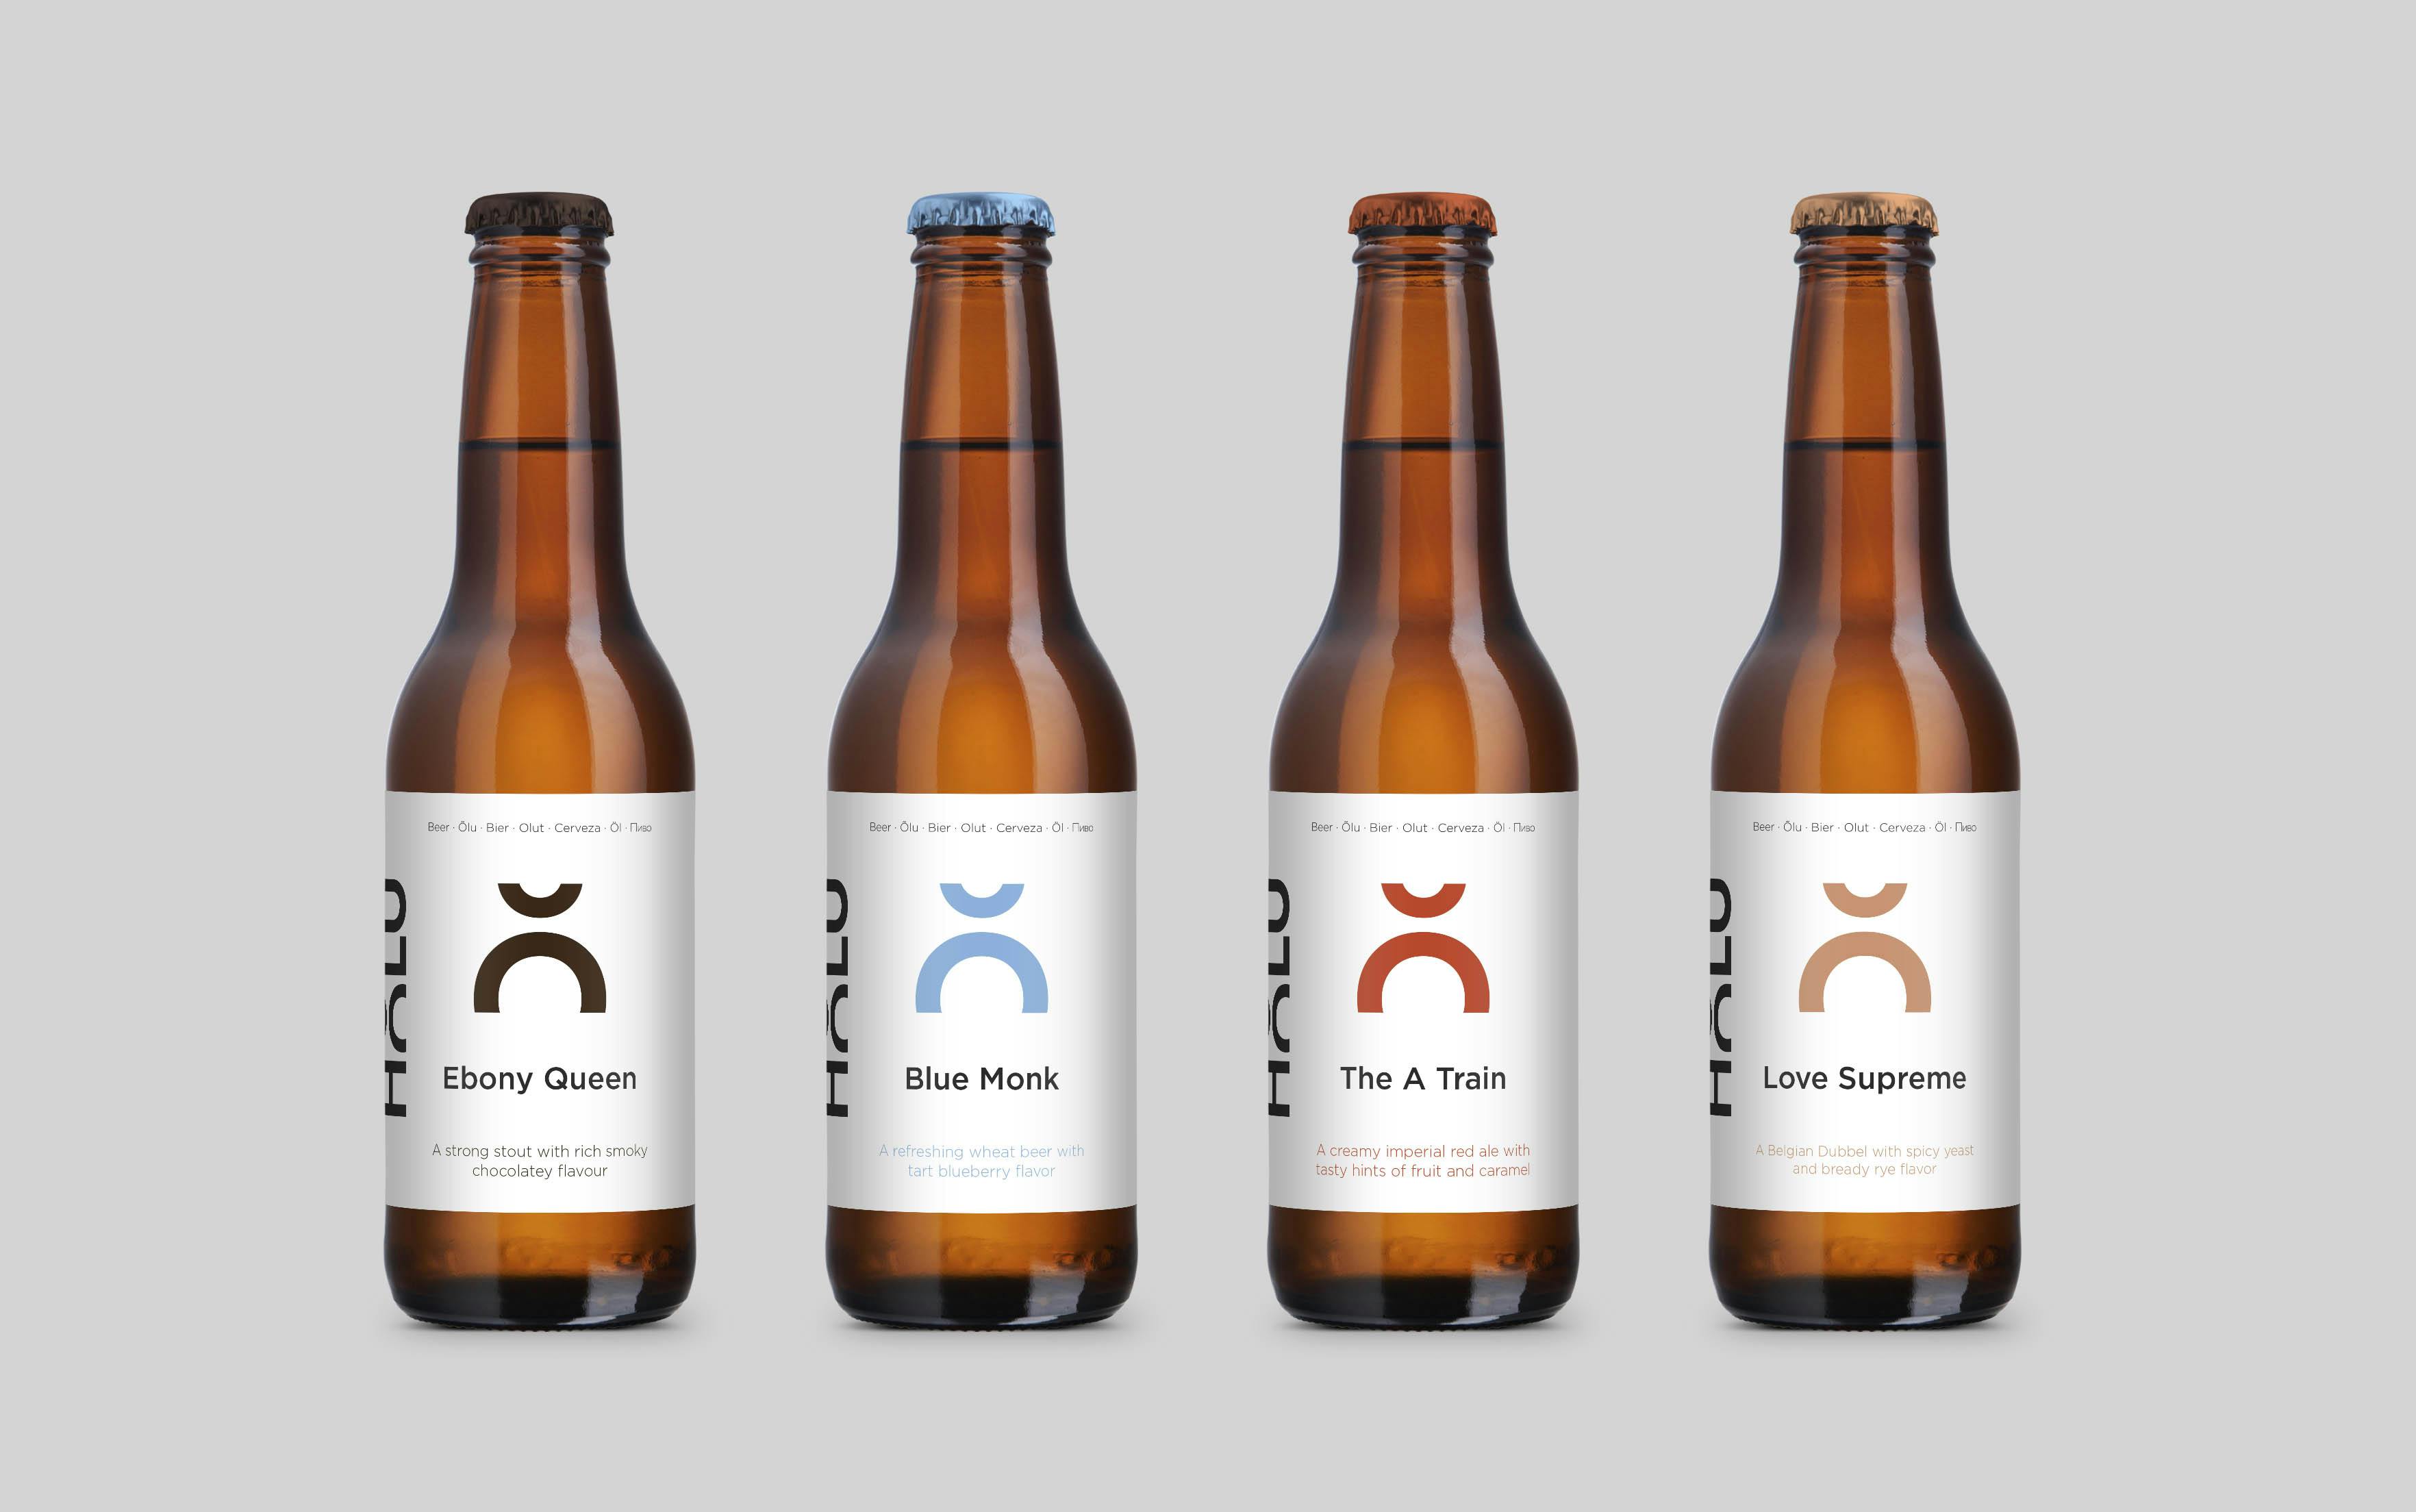 https://site.no11.ee/wp-content/uploads/2018/03/No11_Hõlu_beer-bottle-packaging-design.jpg